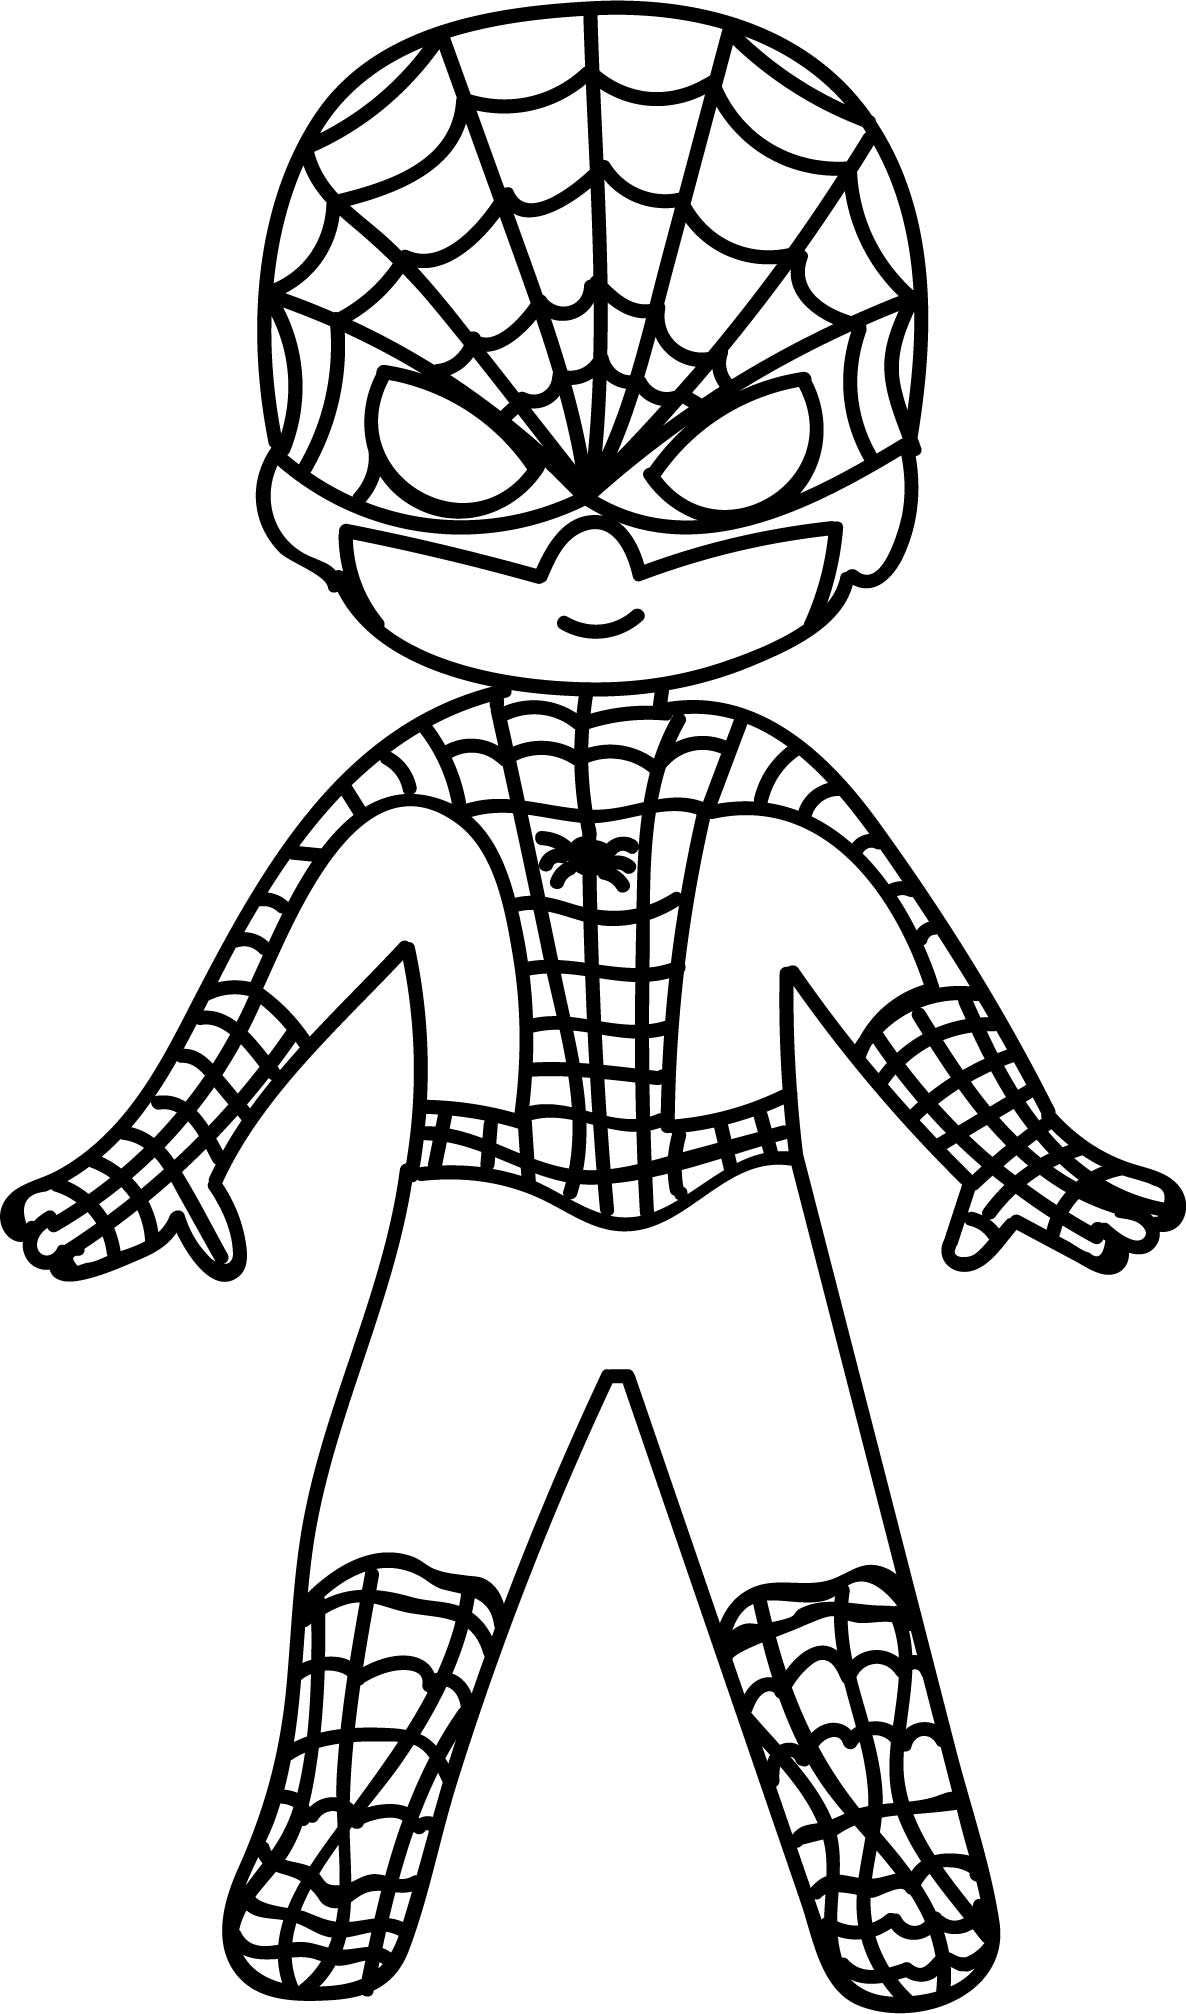 chibi-spiderman-drawing-at-getdrawings-free-download